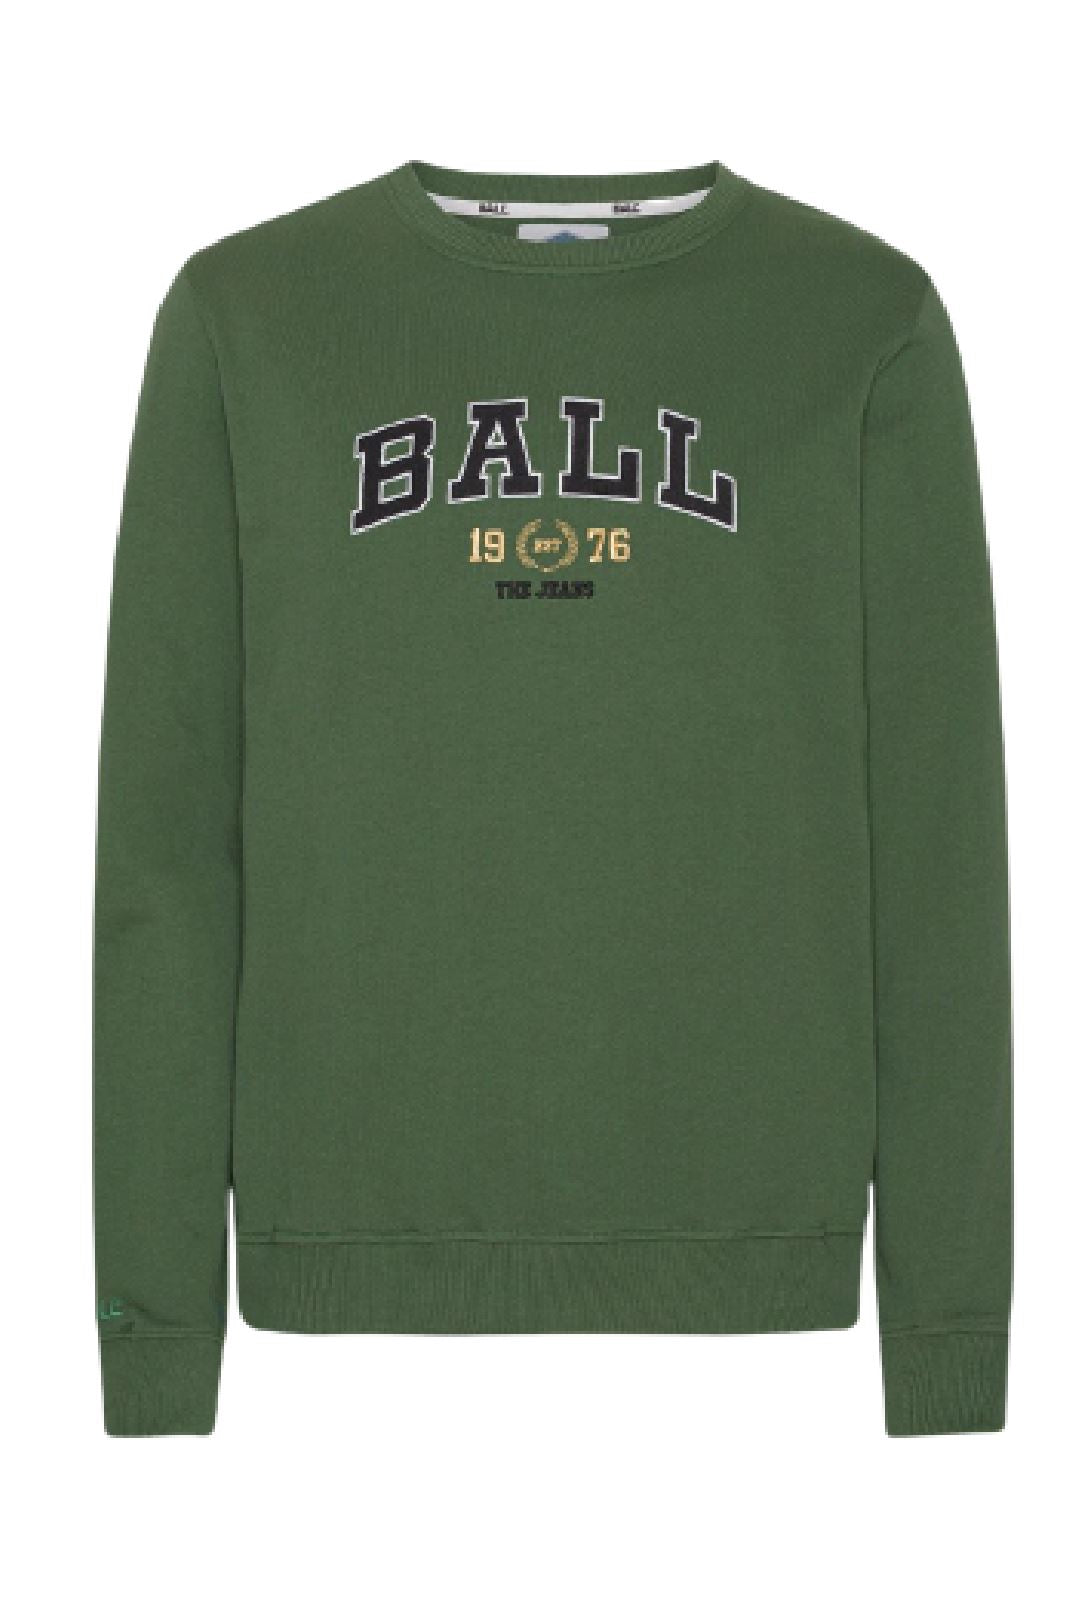 Ball - L. Taylor - Hunter Sweatshirts 